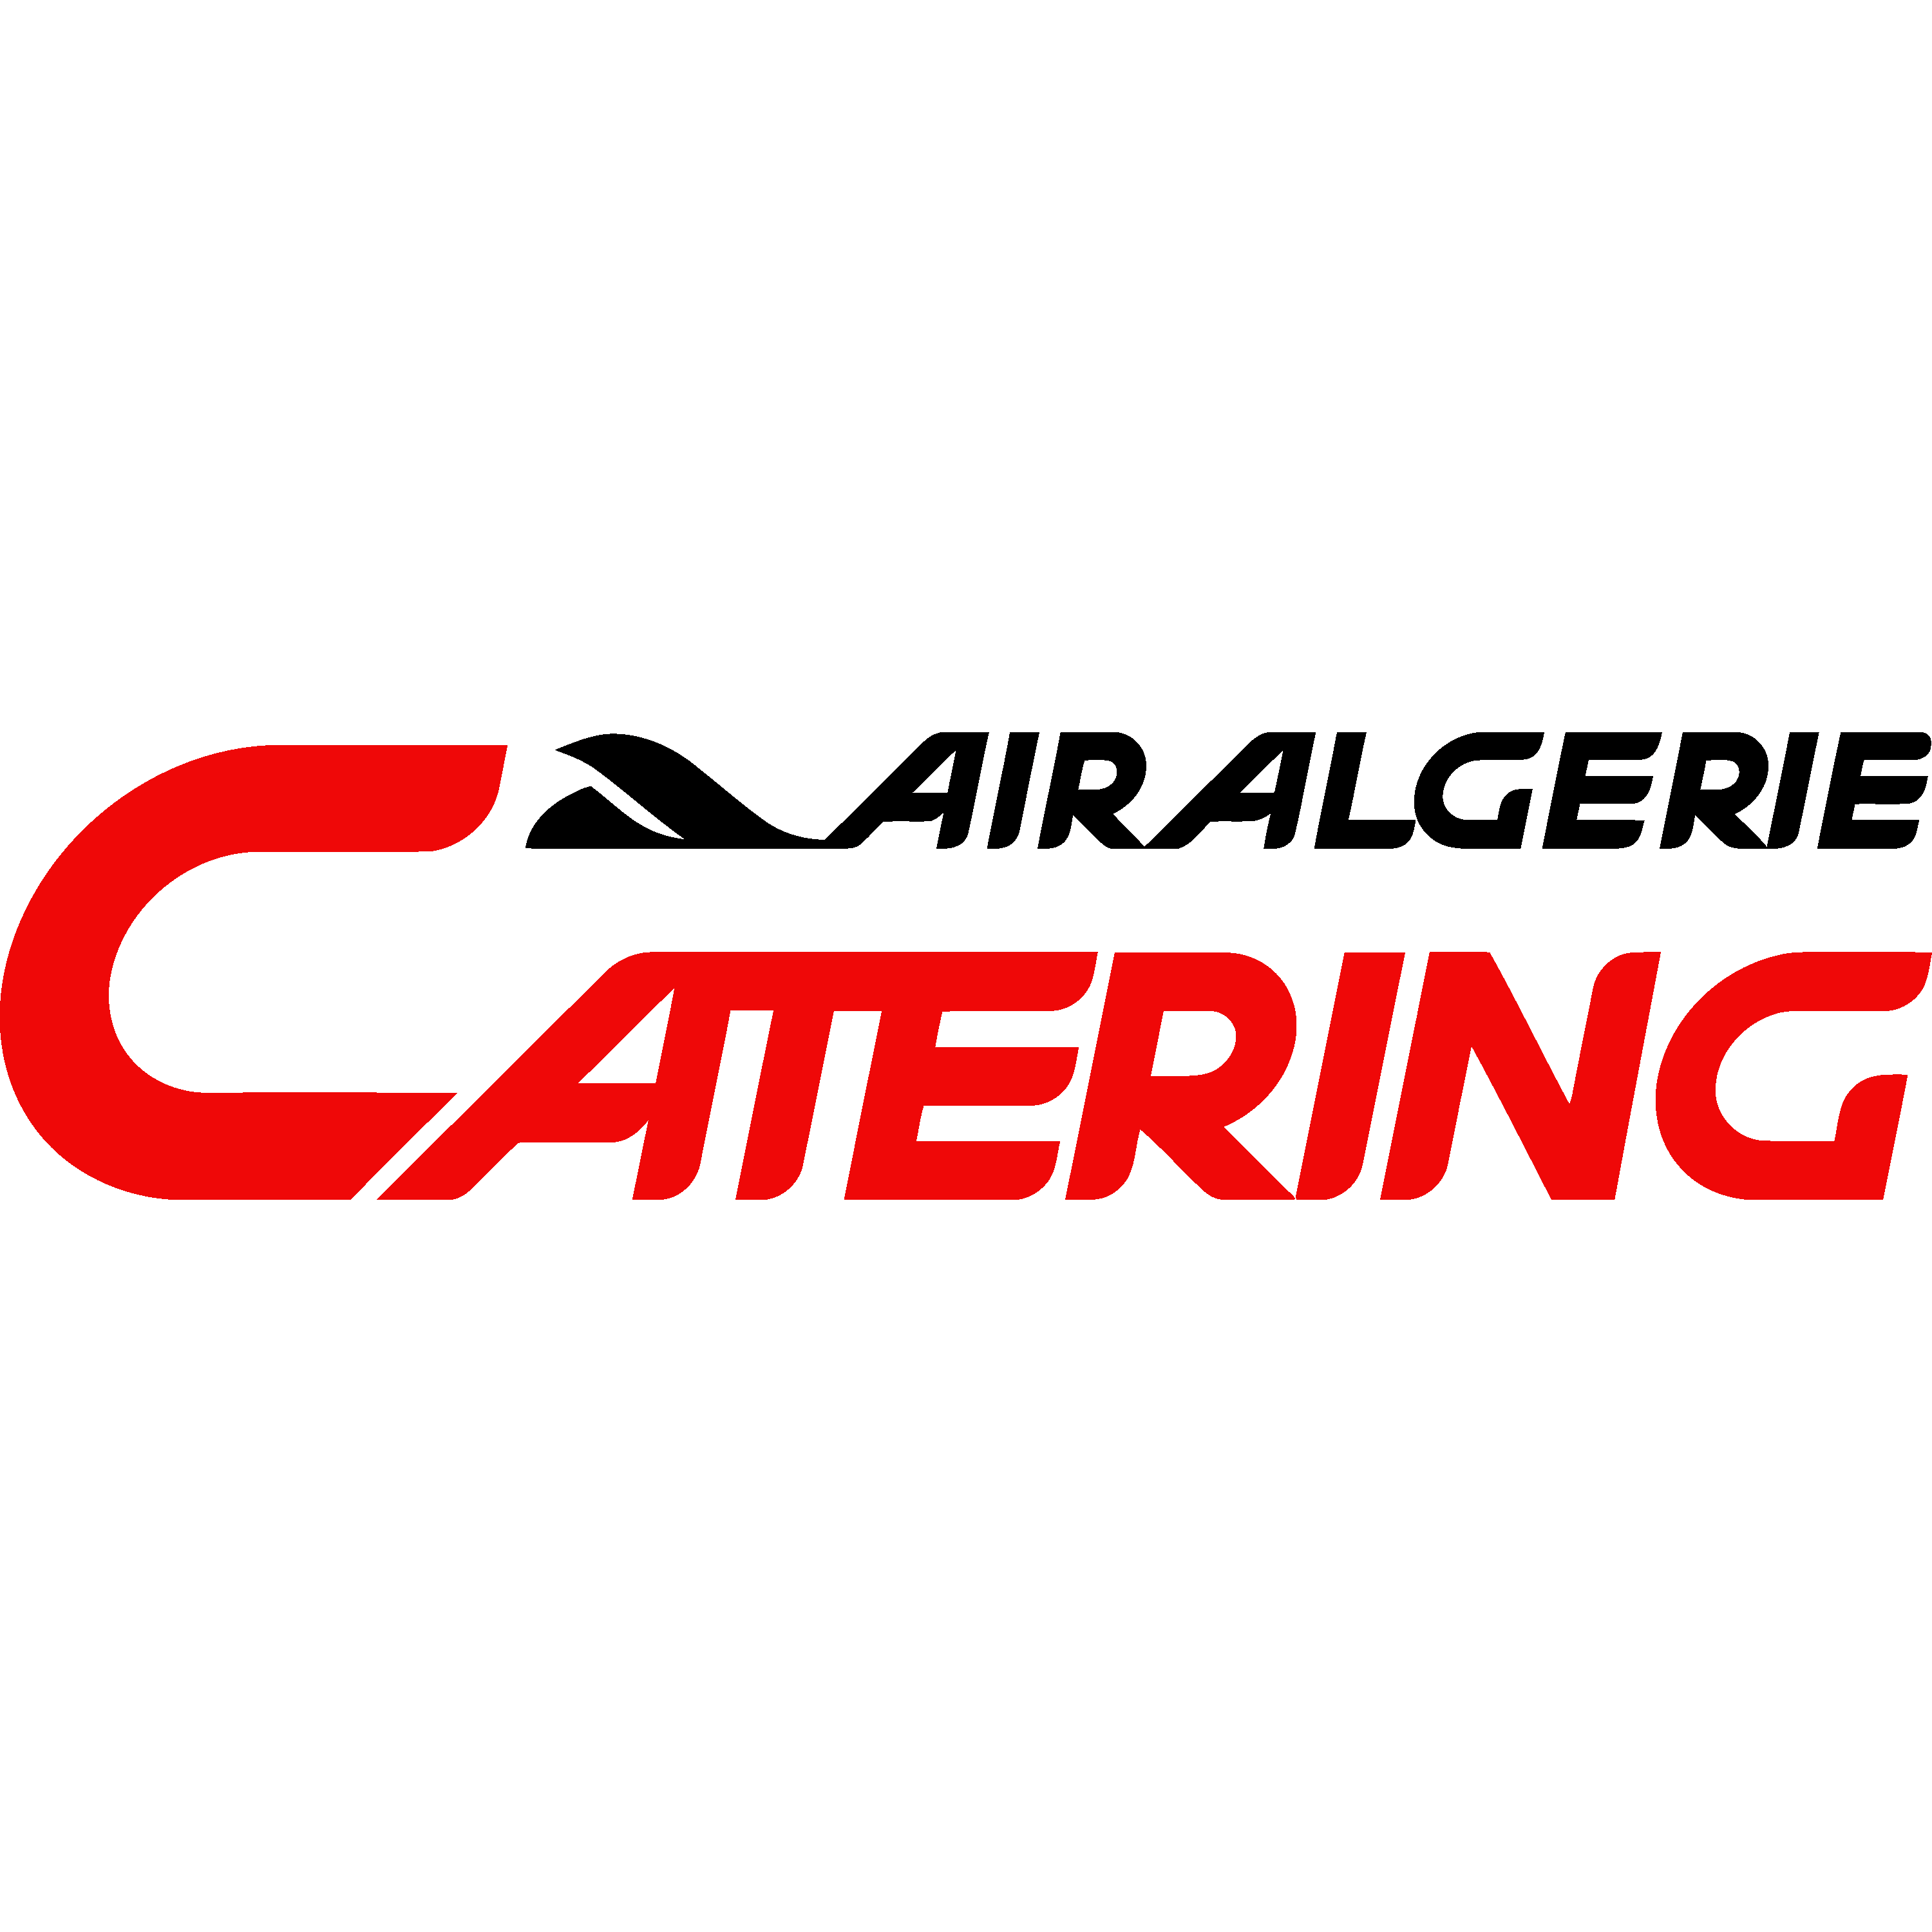 Air Algerie Catering Logo  Transparent Gallery